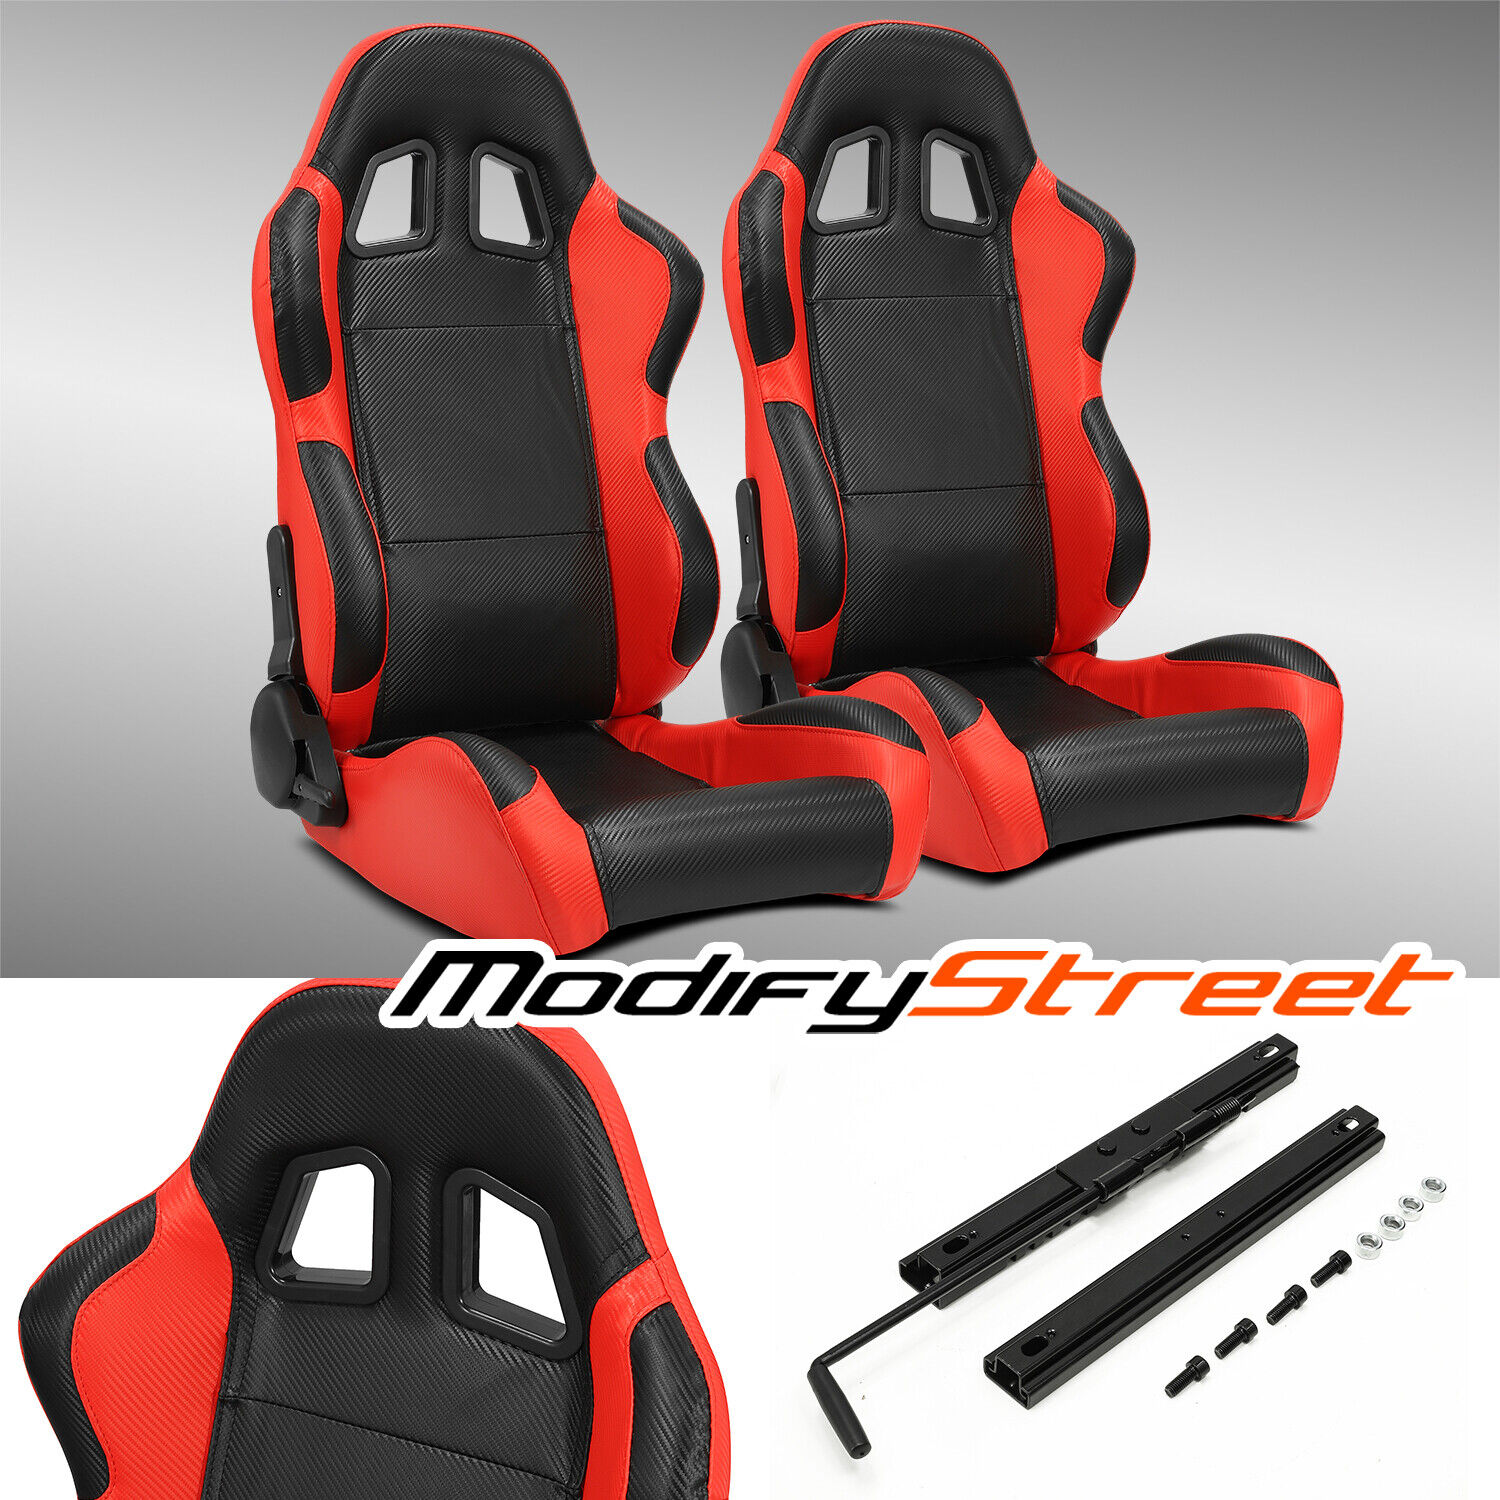 2 x BLACK/SIDE RED CARBON FIBER PVC LEATHER L/R RACING BUCKET SEATS + SLIDER